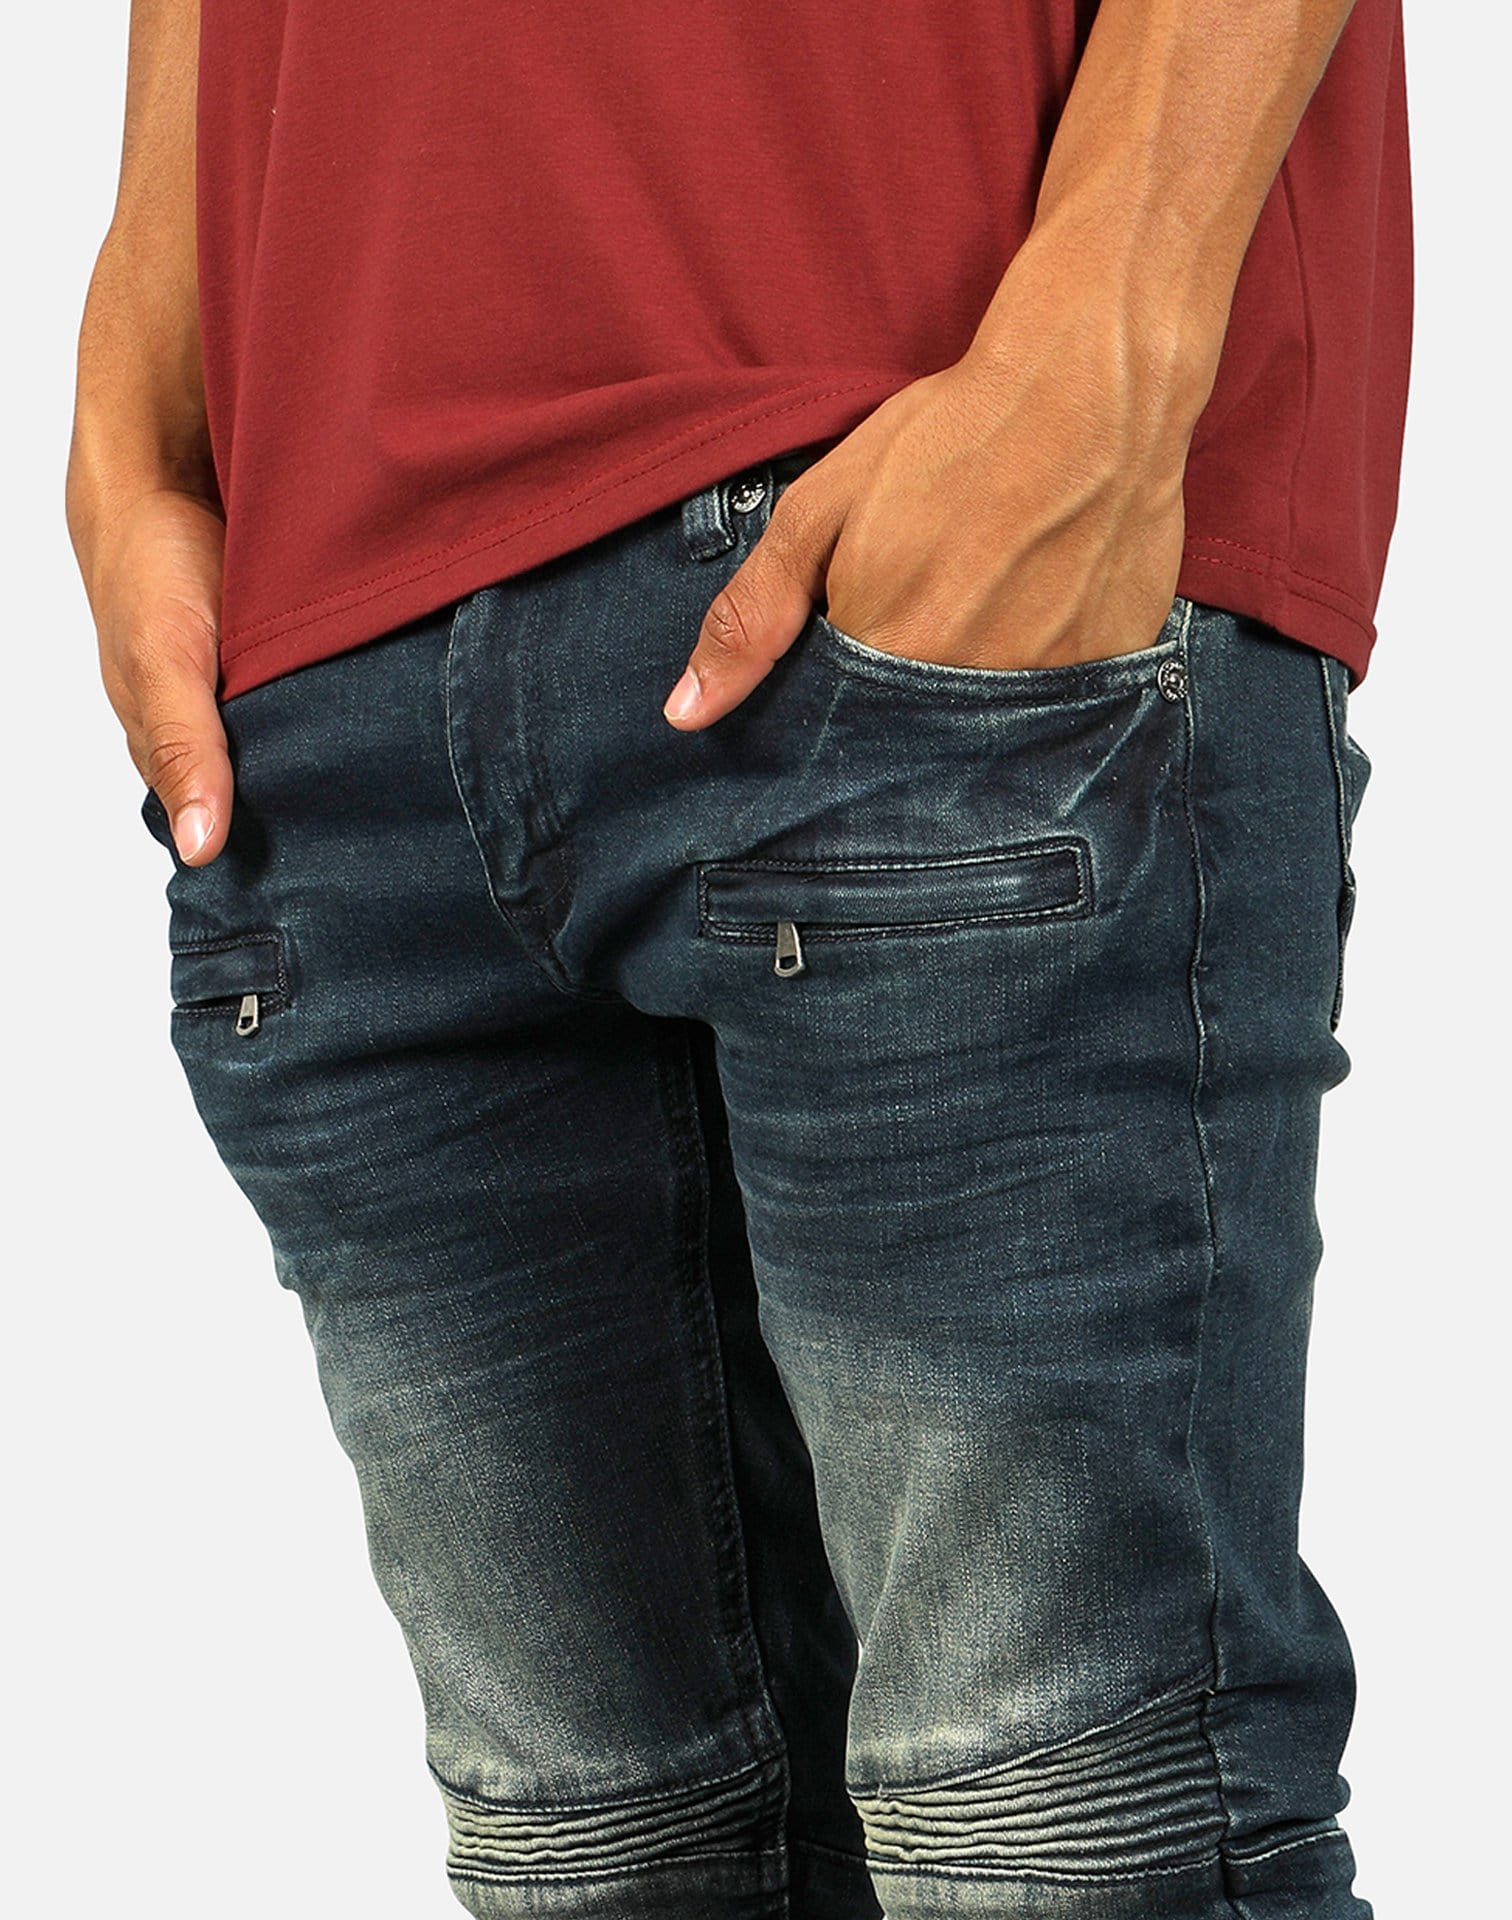 Kilogram Inc. Men's Ripped Moto Jeans